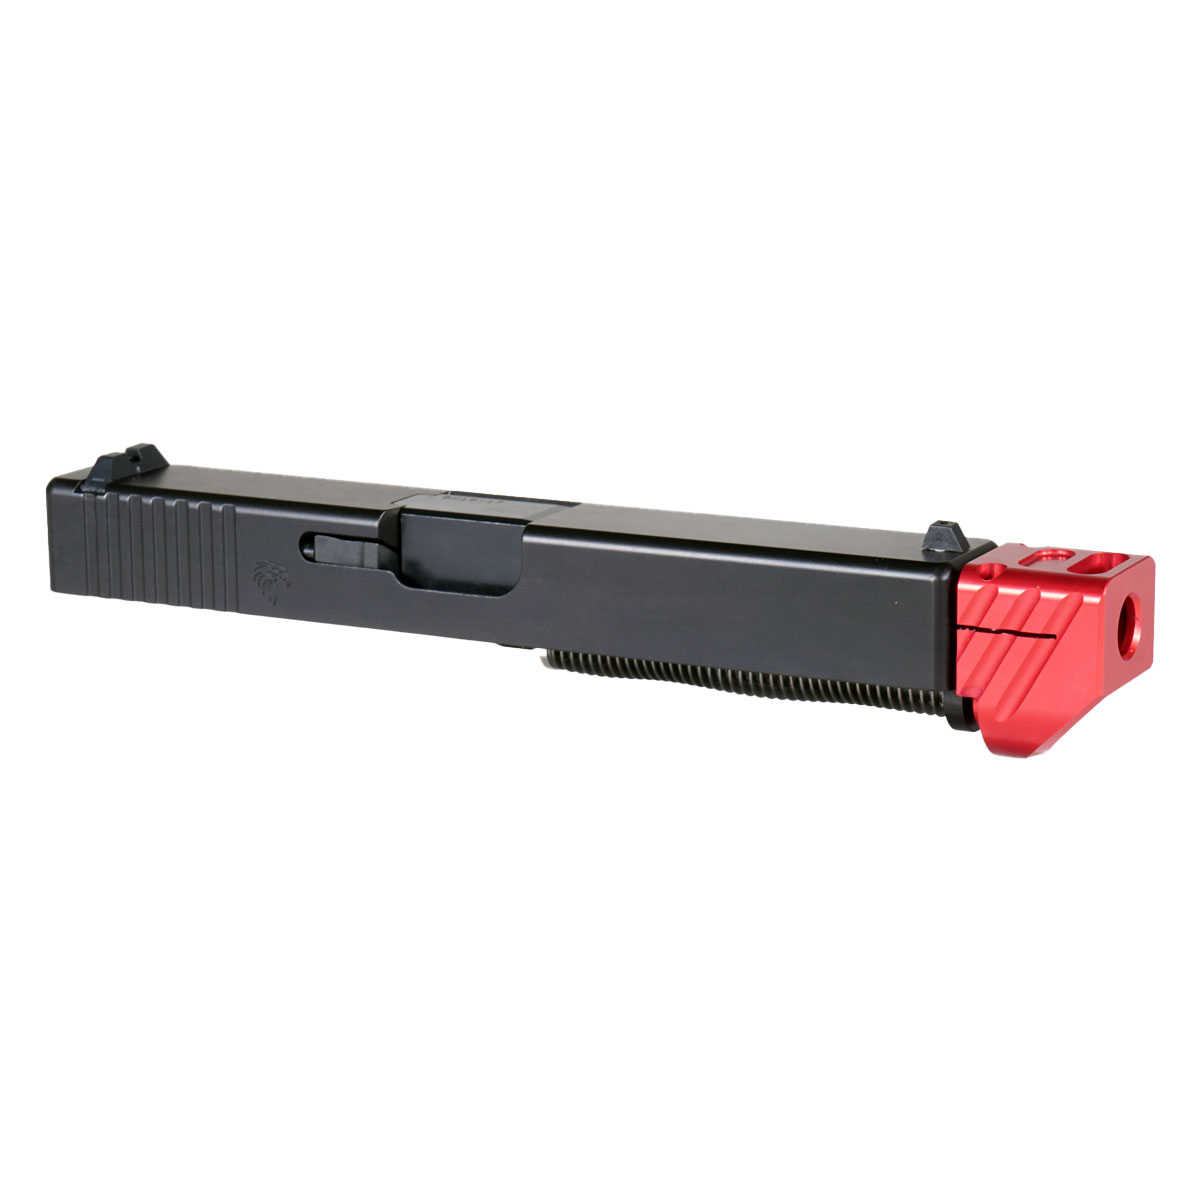 DTT 'Boomerango V3 w/ Red Compensator' 9mm Complete Slide Kit - Glock 17 Gen 1-3 Compatible